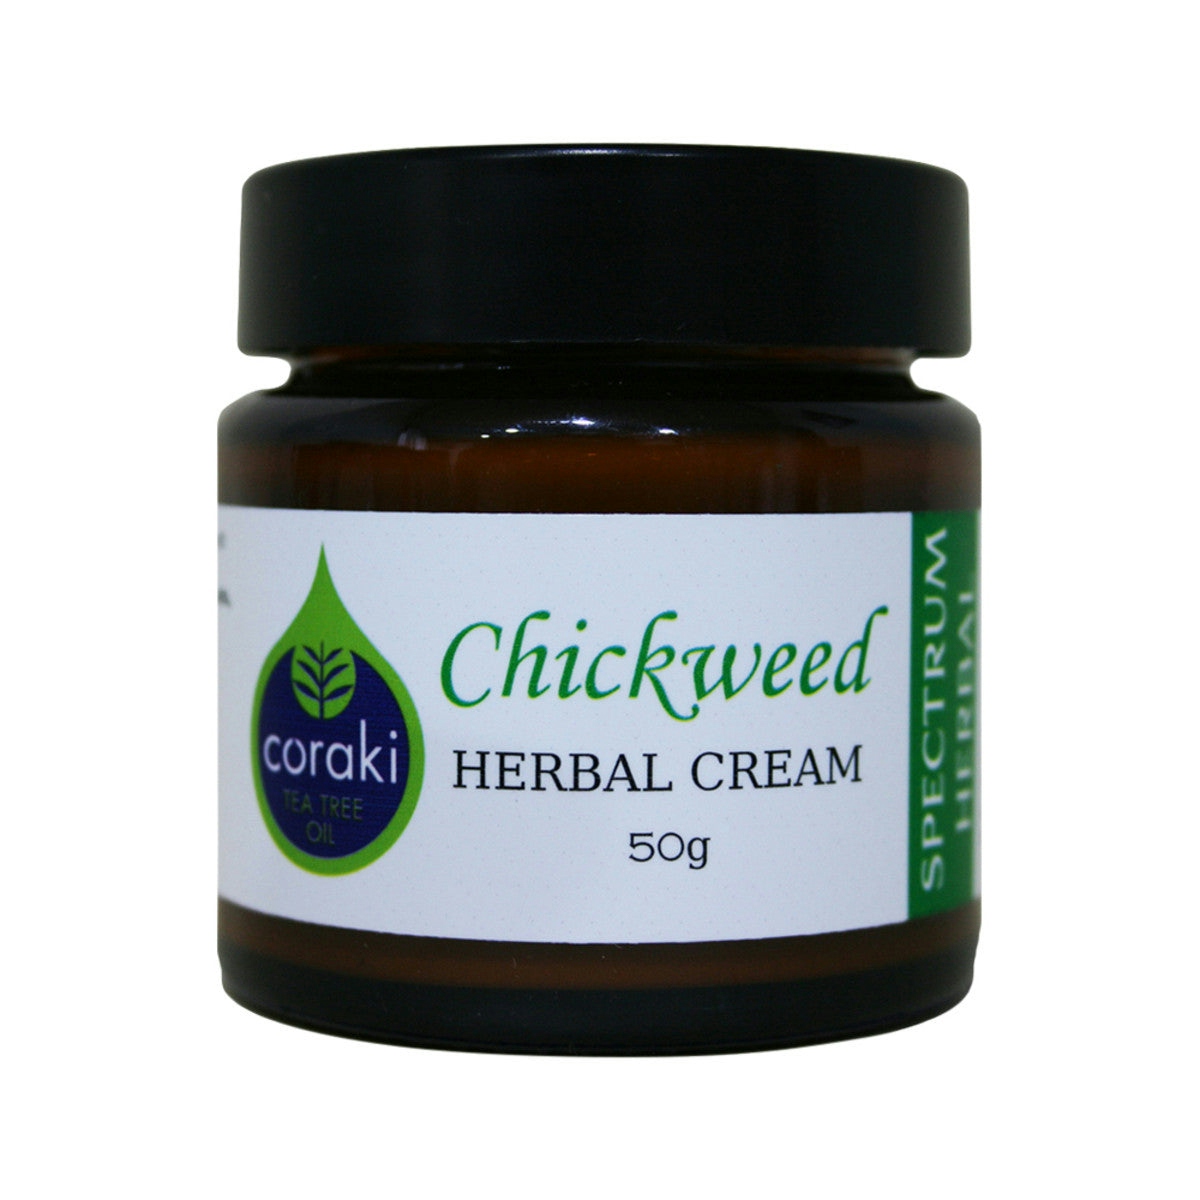 image of Spectrum Herbal Herbal Cream Chickweed with Coraki Tea Tree Oil 50g on white background